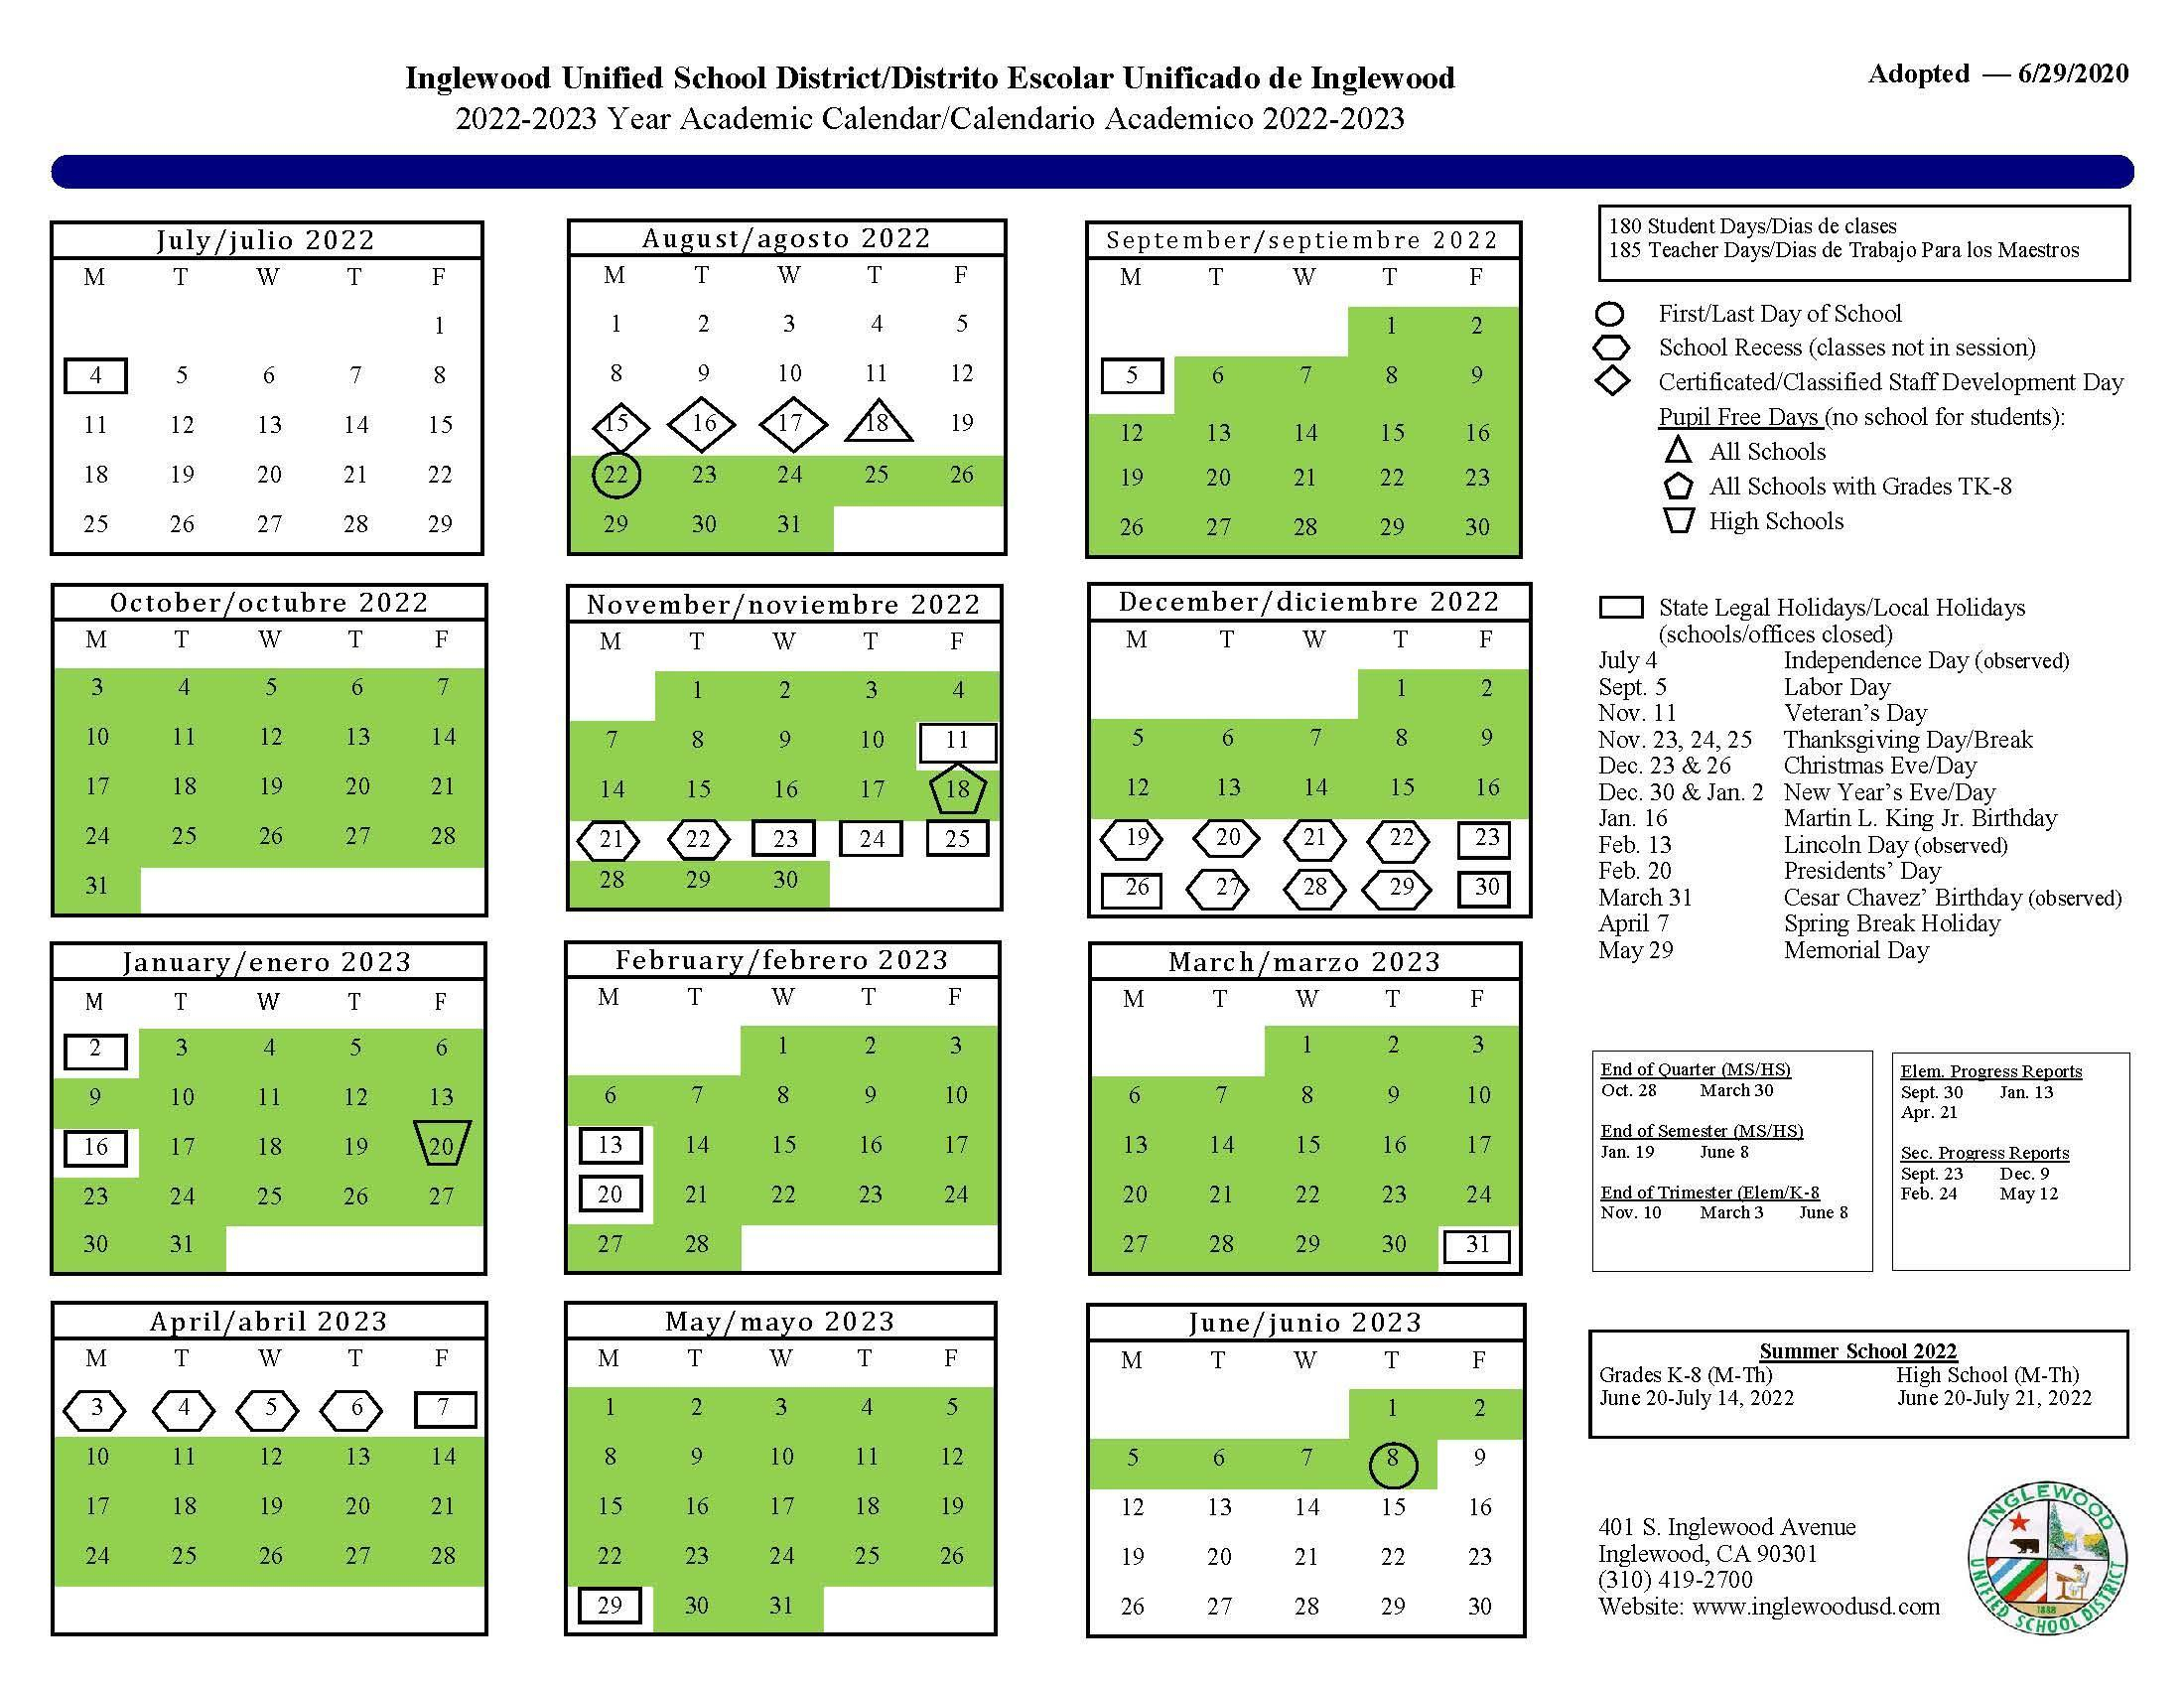 Ccps 2024 School Calendar Image To U